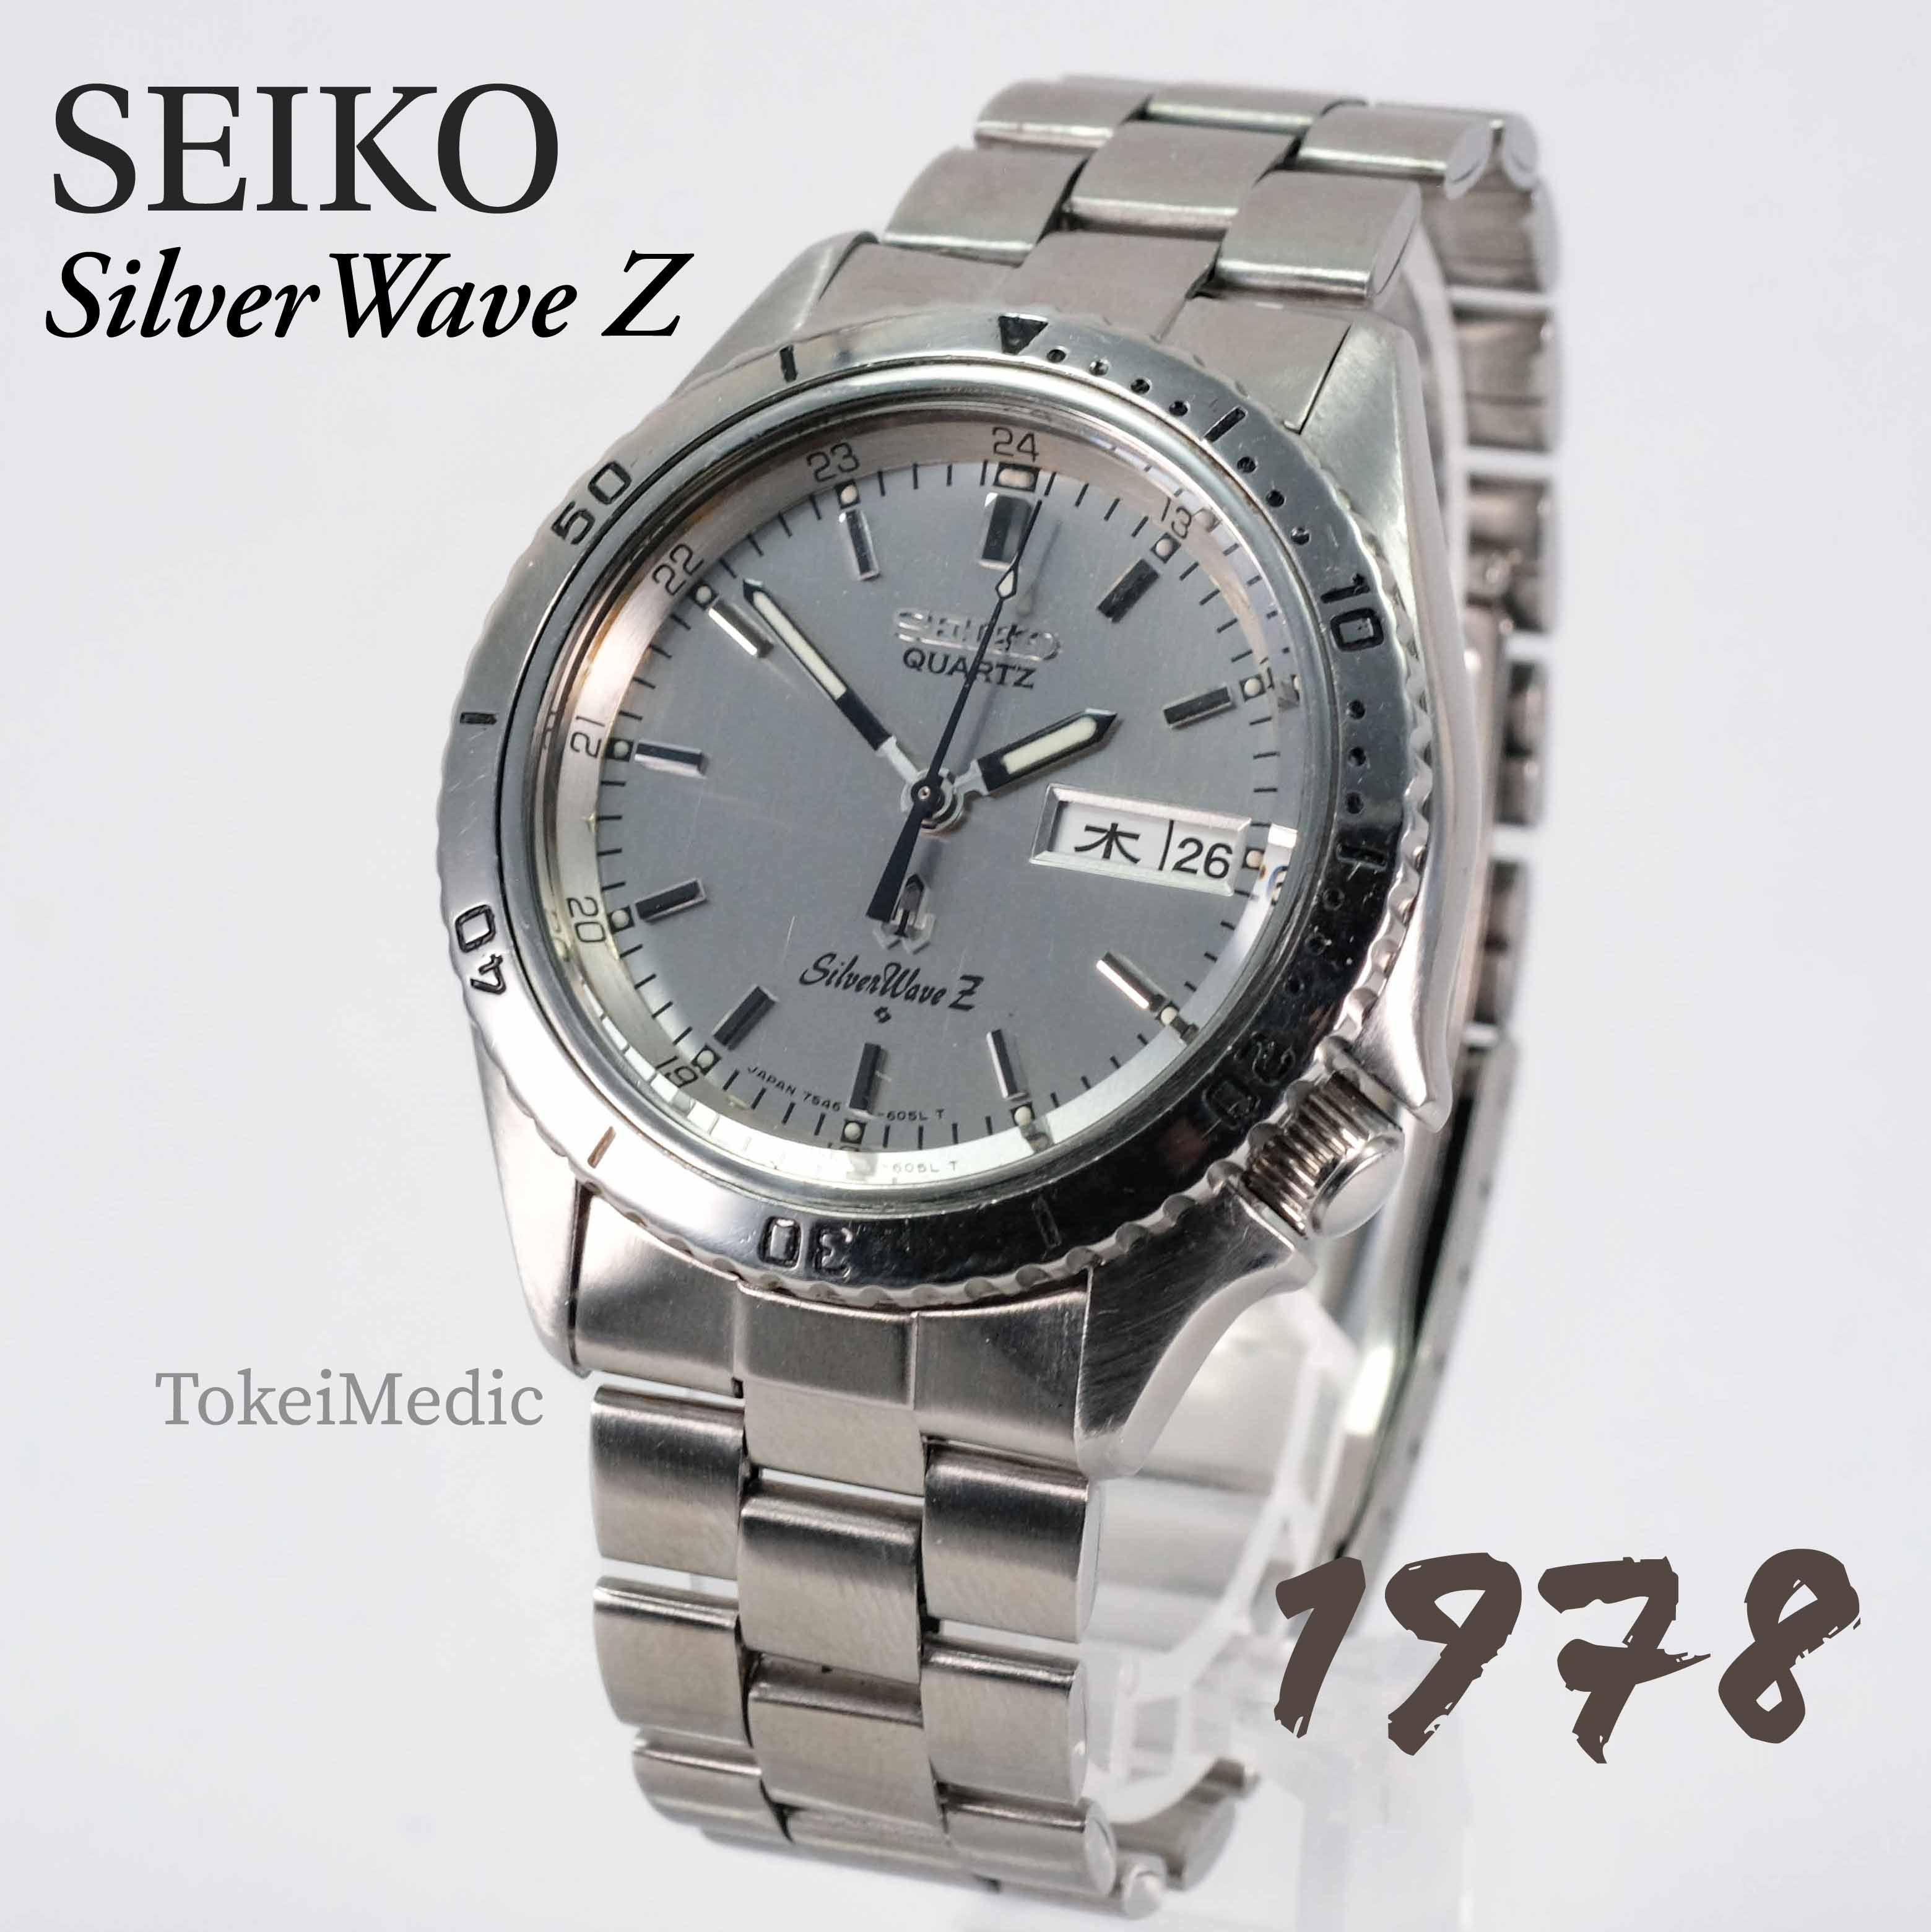 SEIKO Silver Wave Z 7546-605A 新登場 - 時計